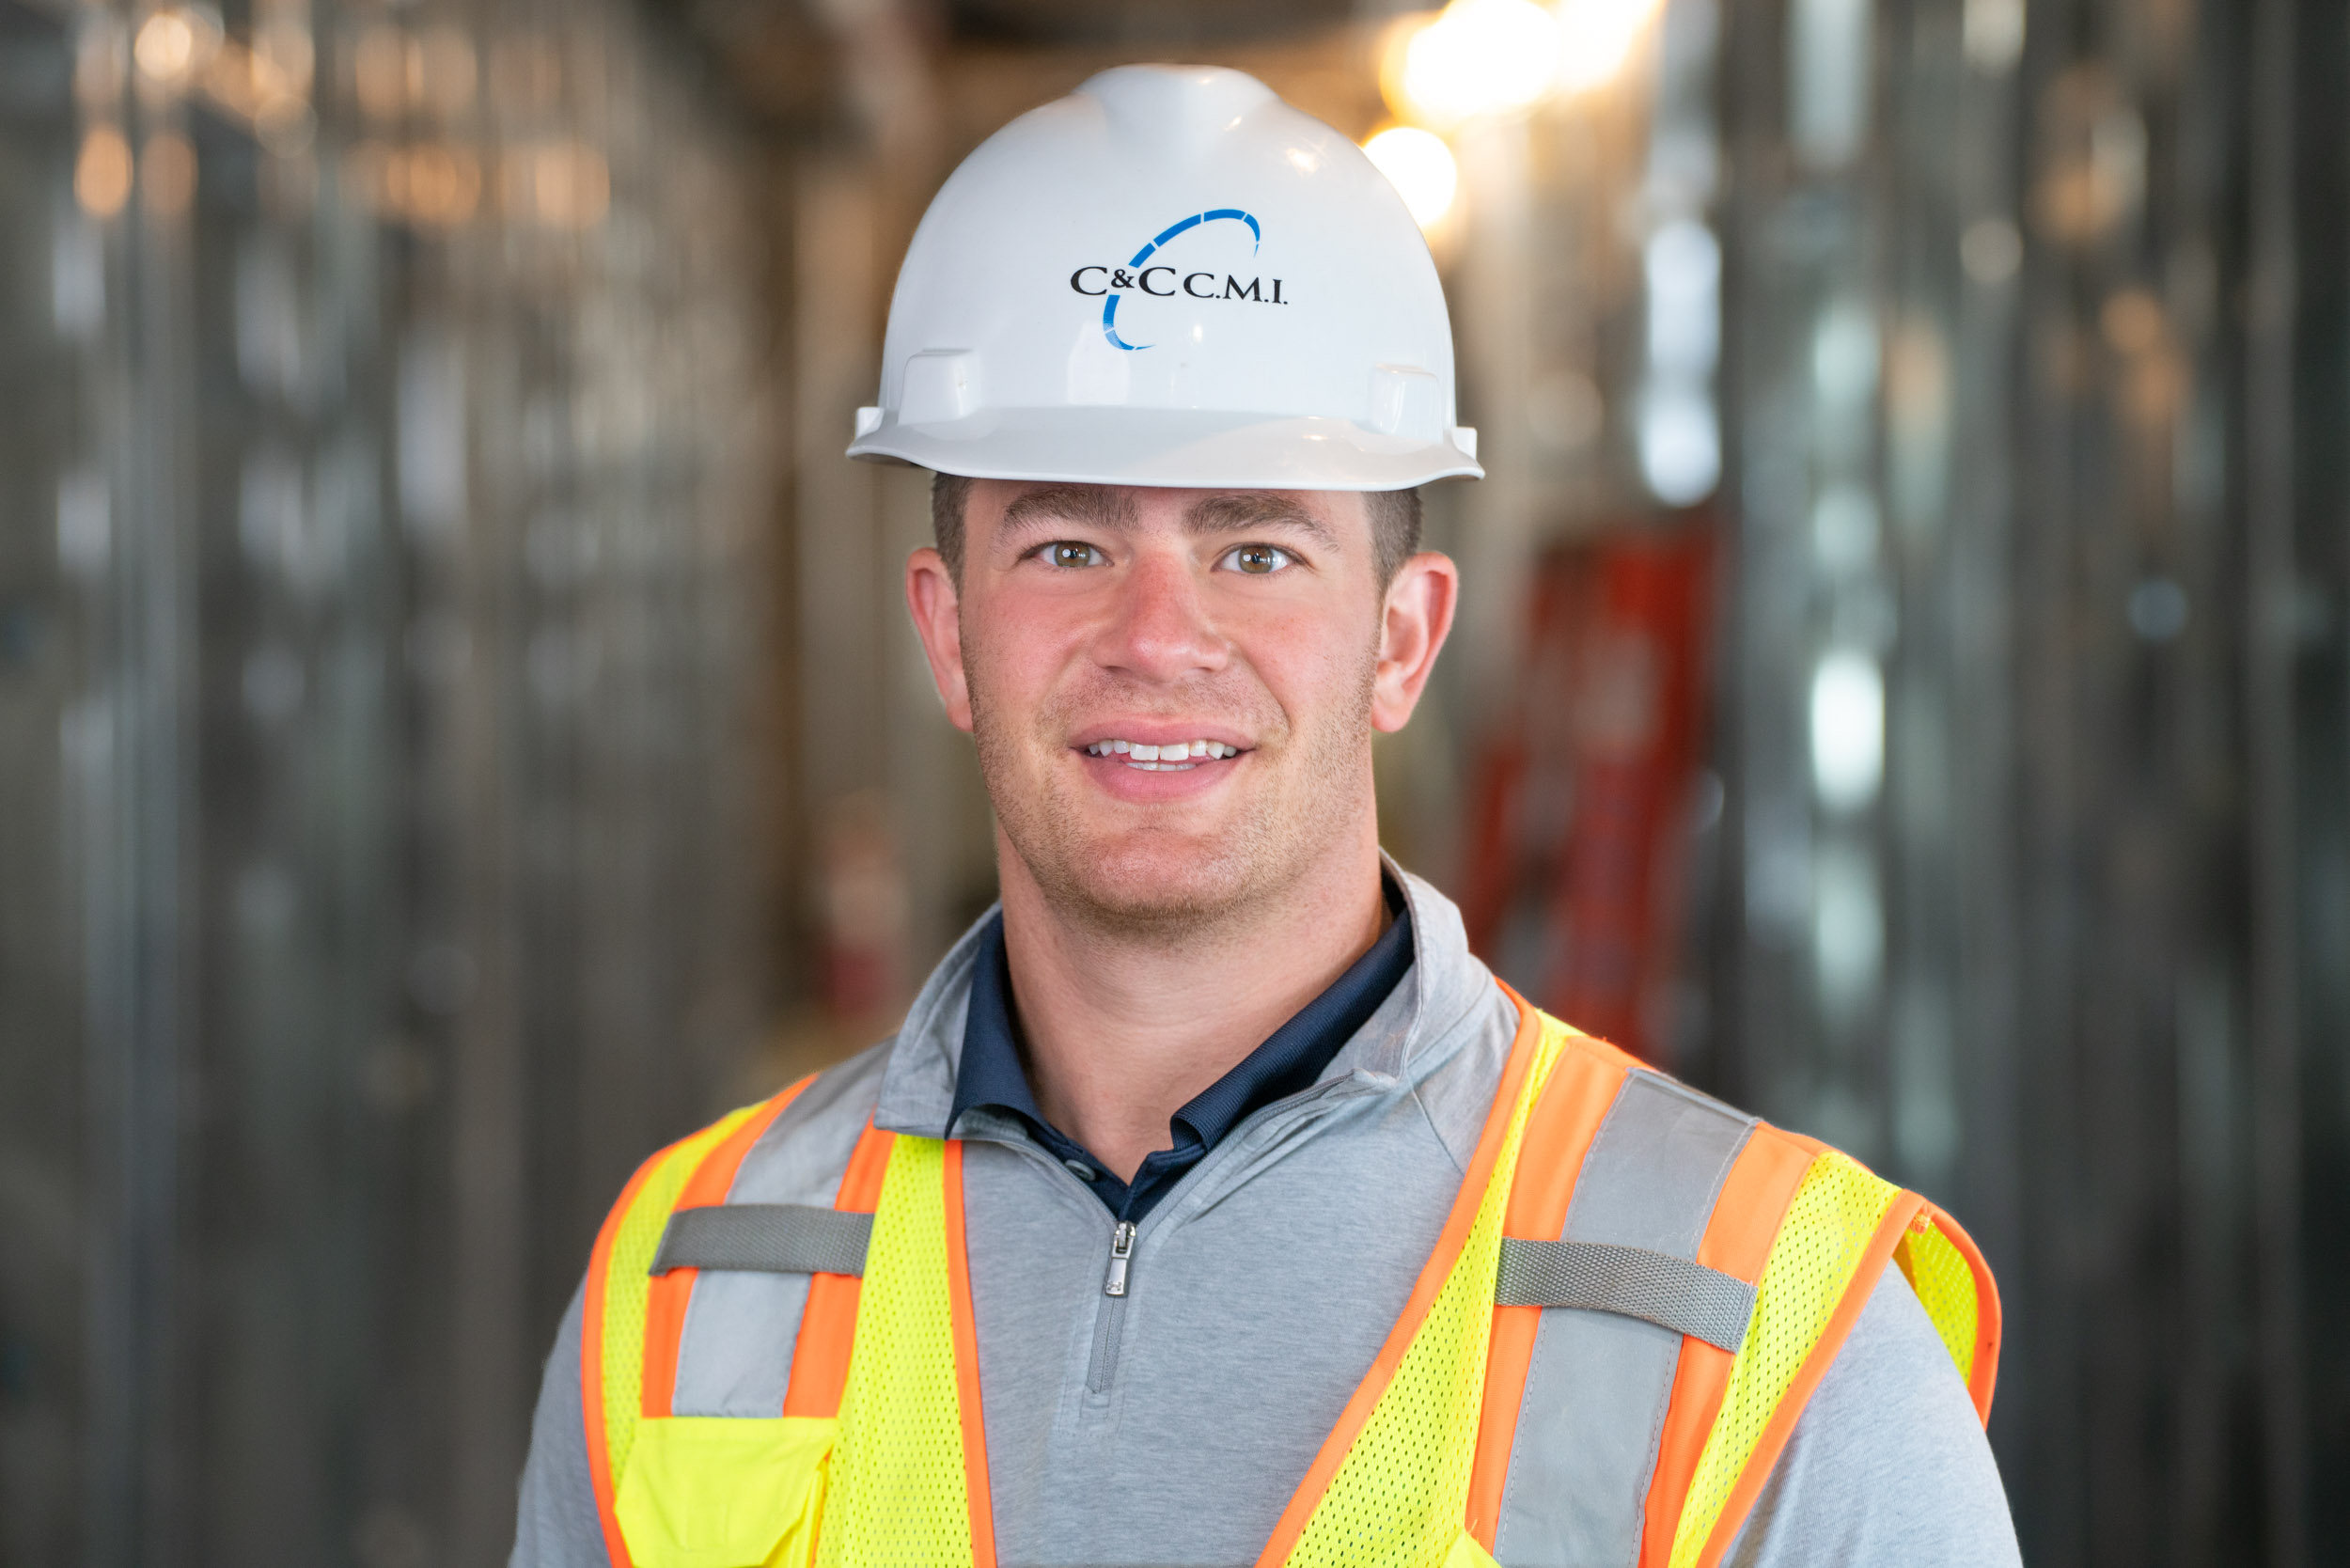 David Rakszawski of C & C Construction Management Inc. based in Philadelphia